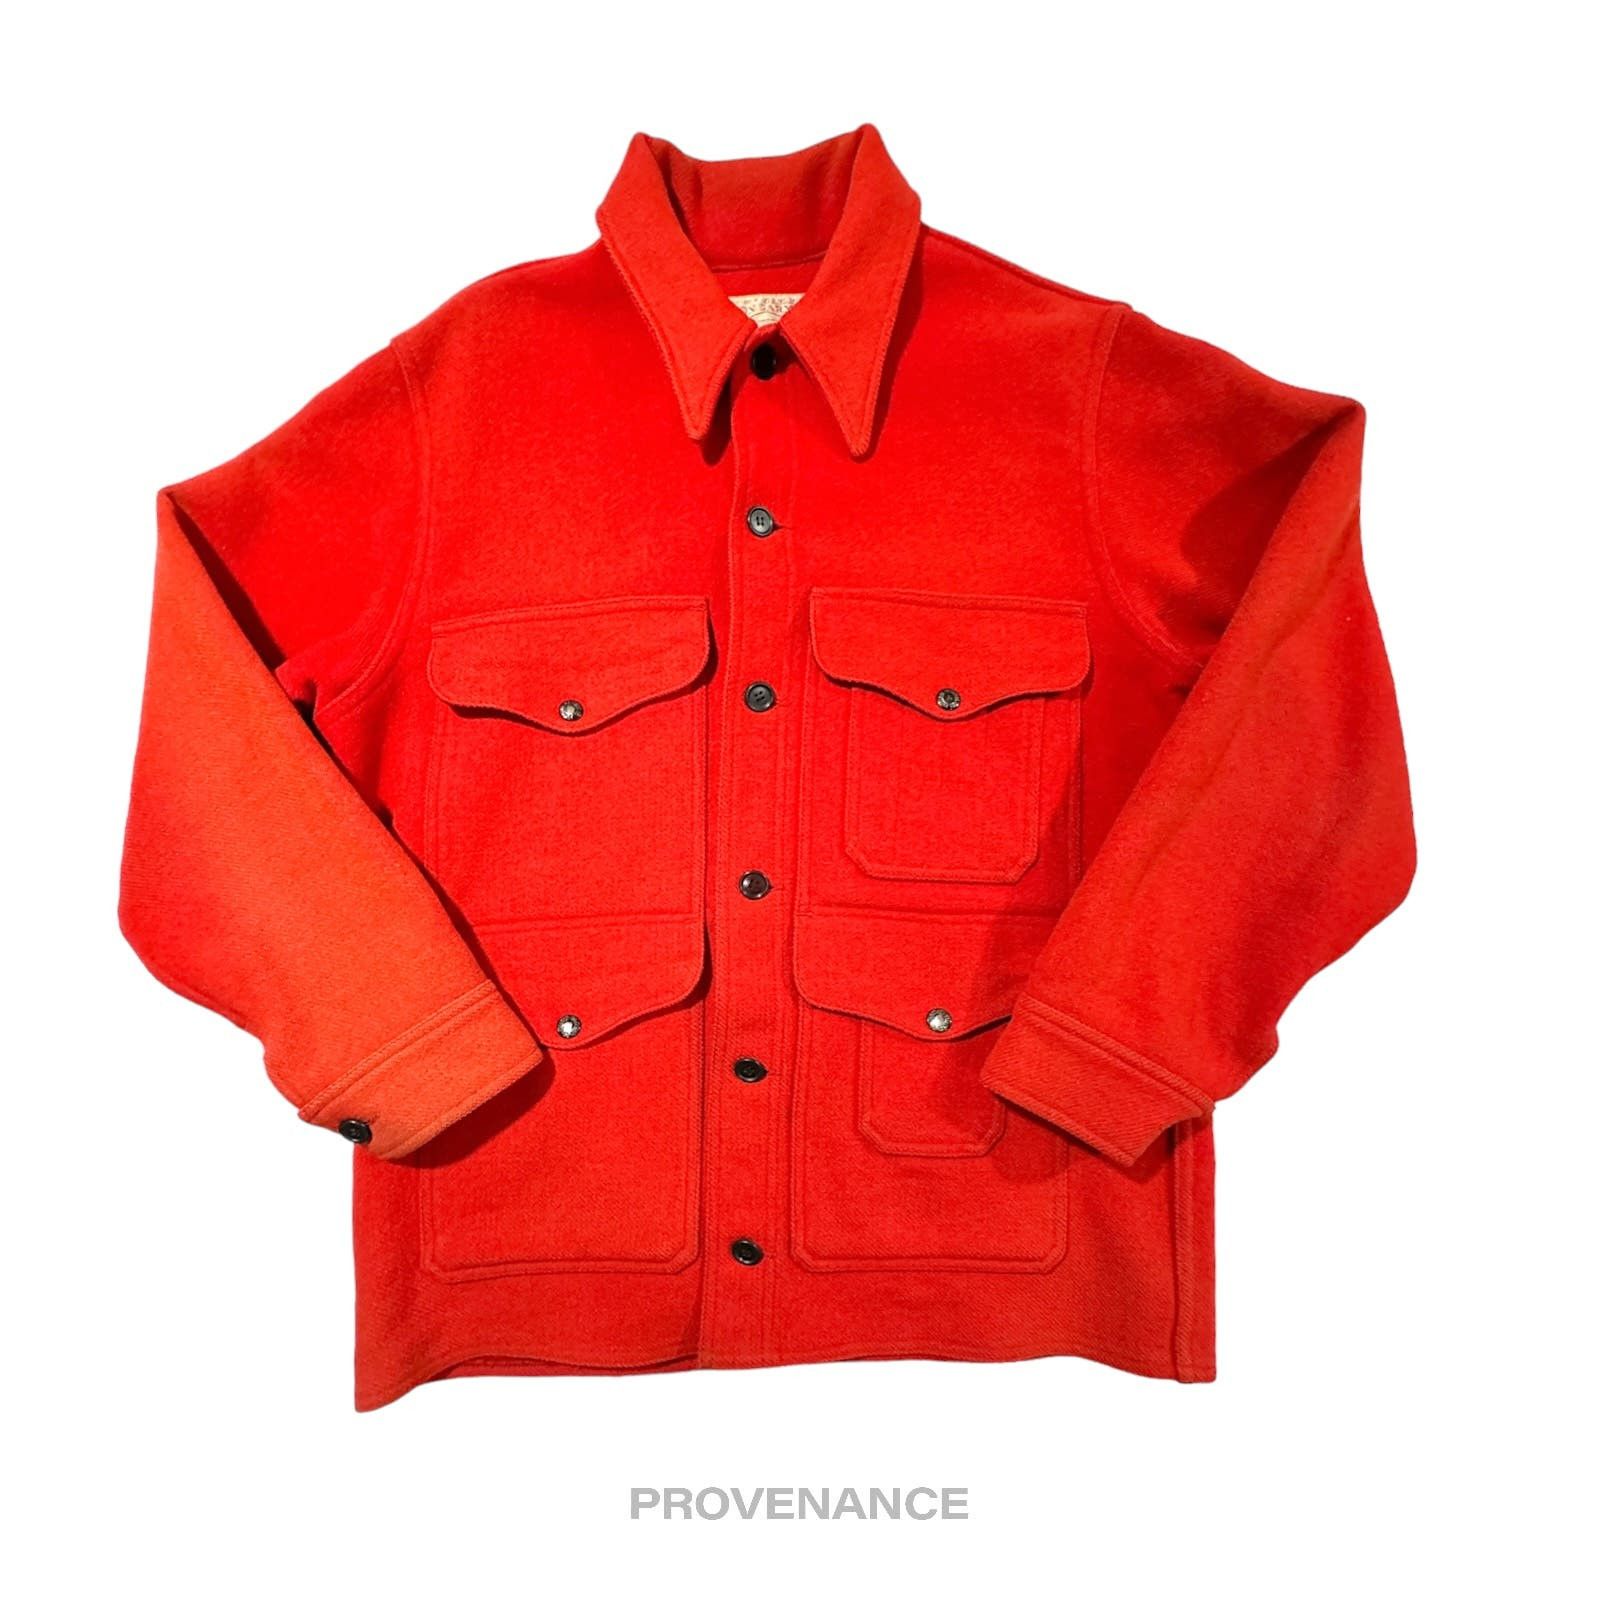 Filson 🔴 Filson Mackinaw Wool Cruiser Jacket - Scarlet Red 42 M Size US M / EU 48-50 / 2 - 1 Preview